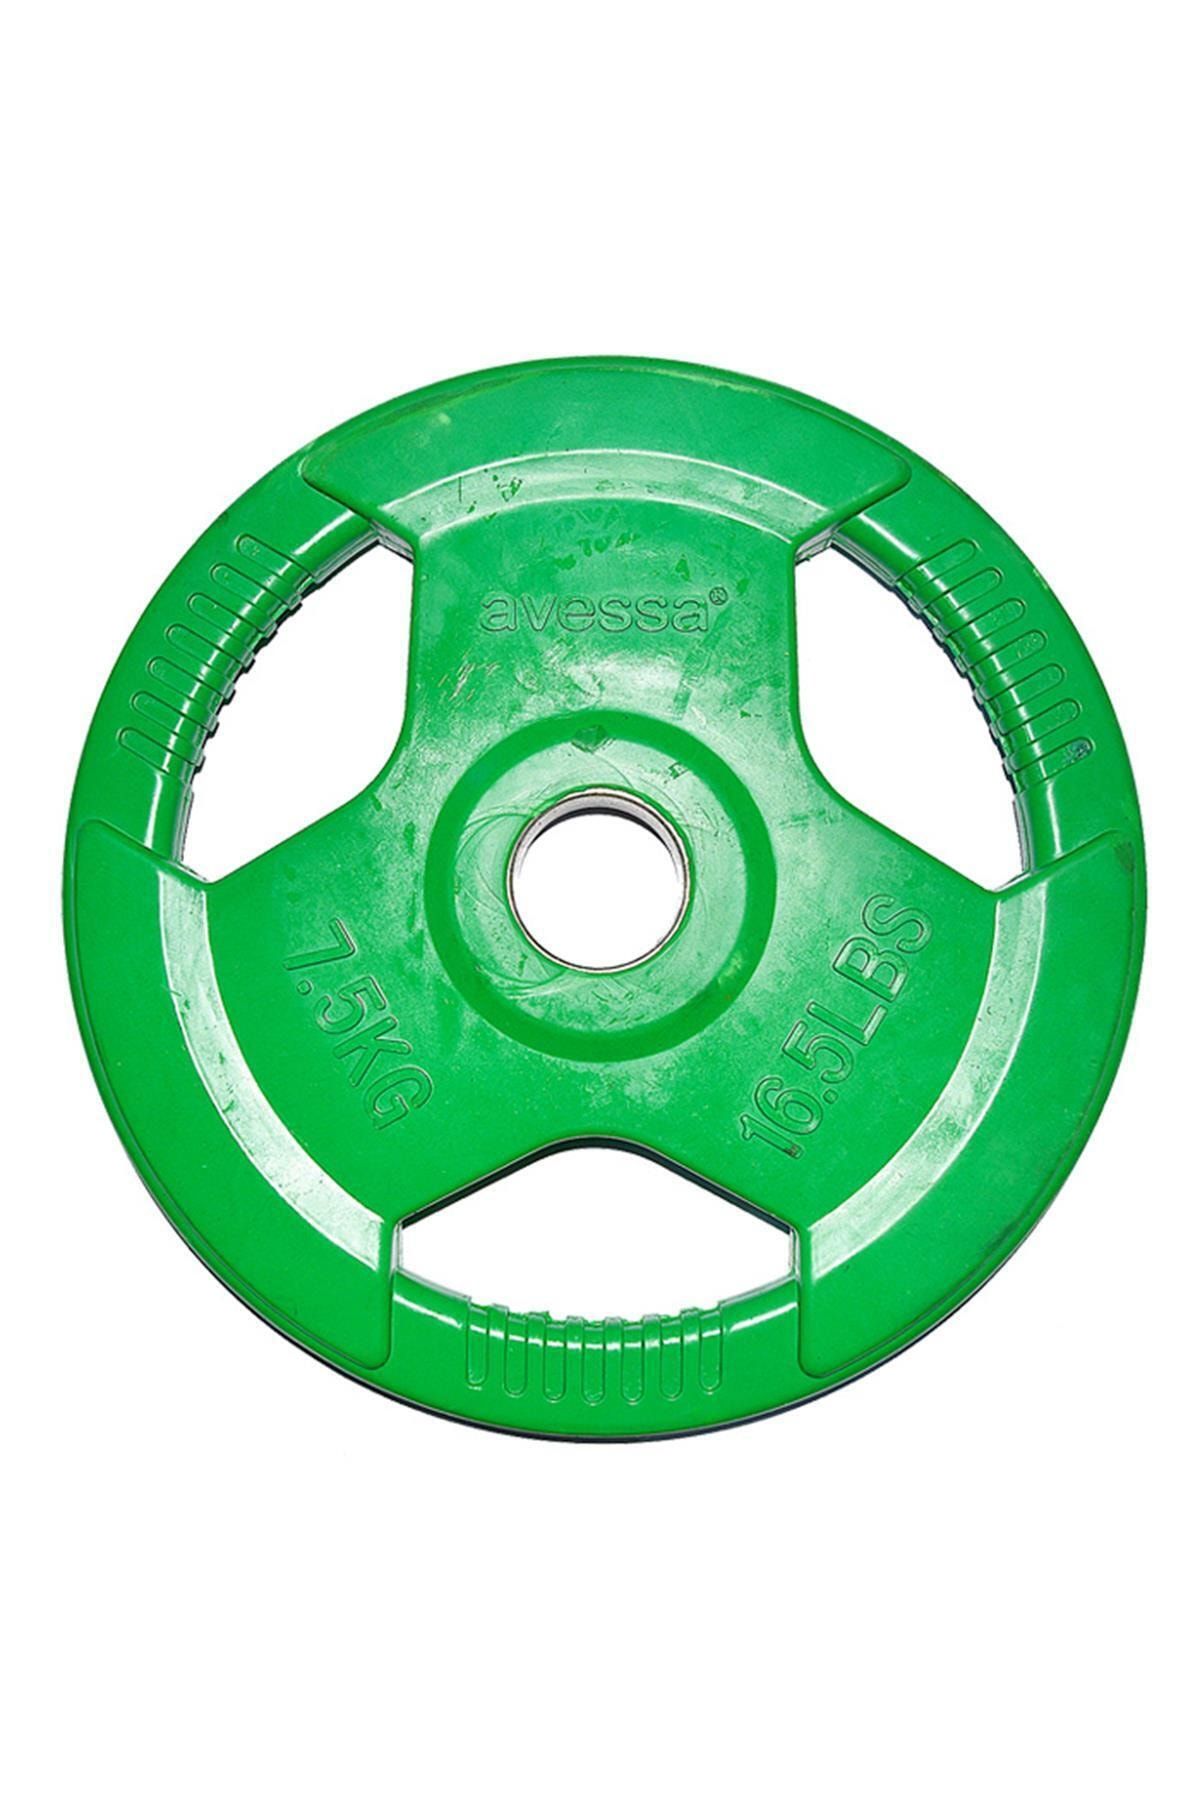 Avessa Olimpik Kauçuk Plaka Yeşil Mb 12111 - 1 Adet 7.5 kg